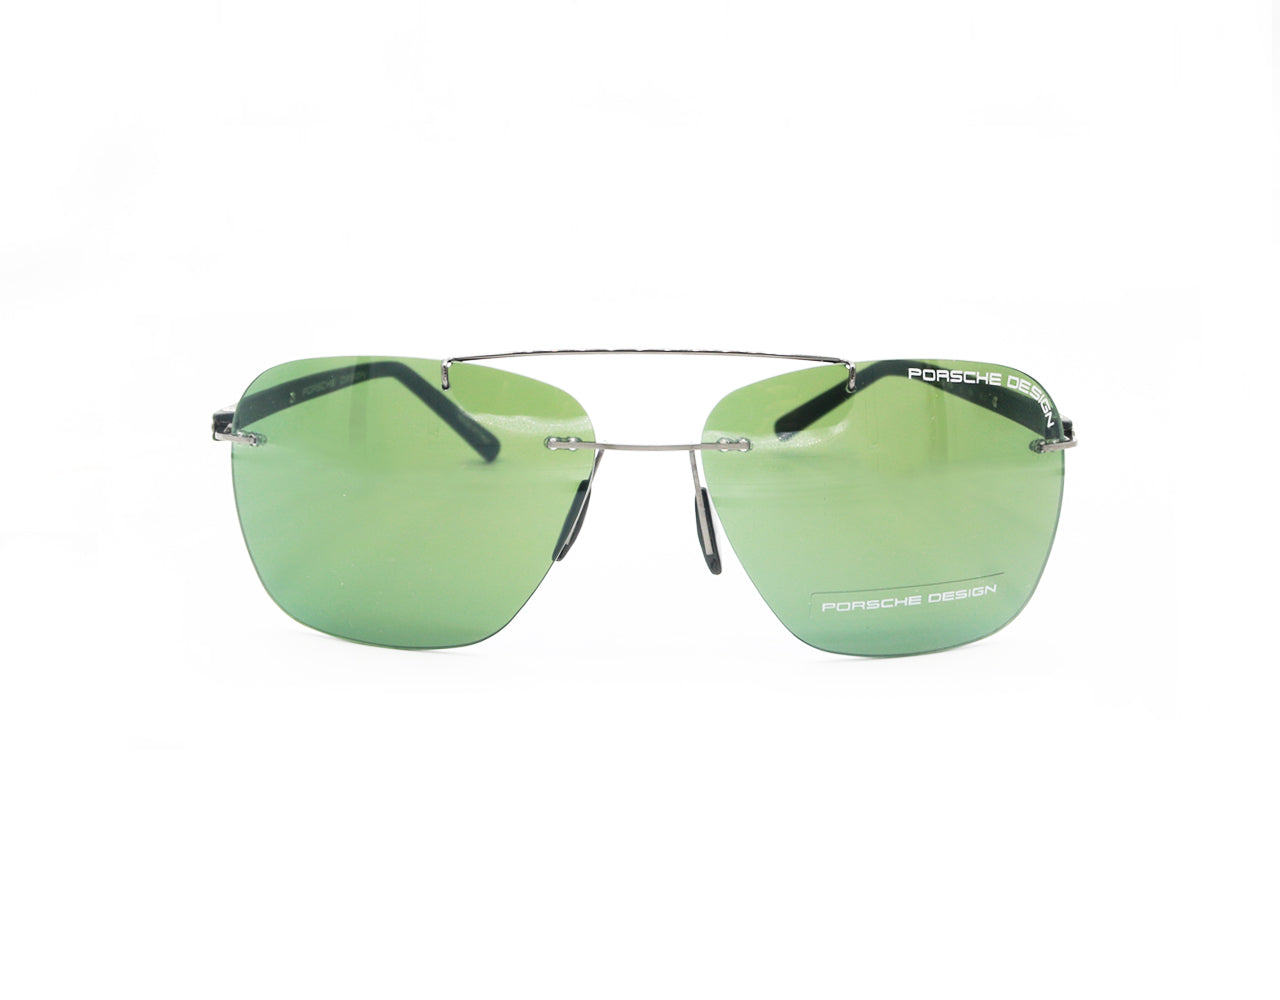 NS Deluxe - 89975 - Black - Sunglasses